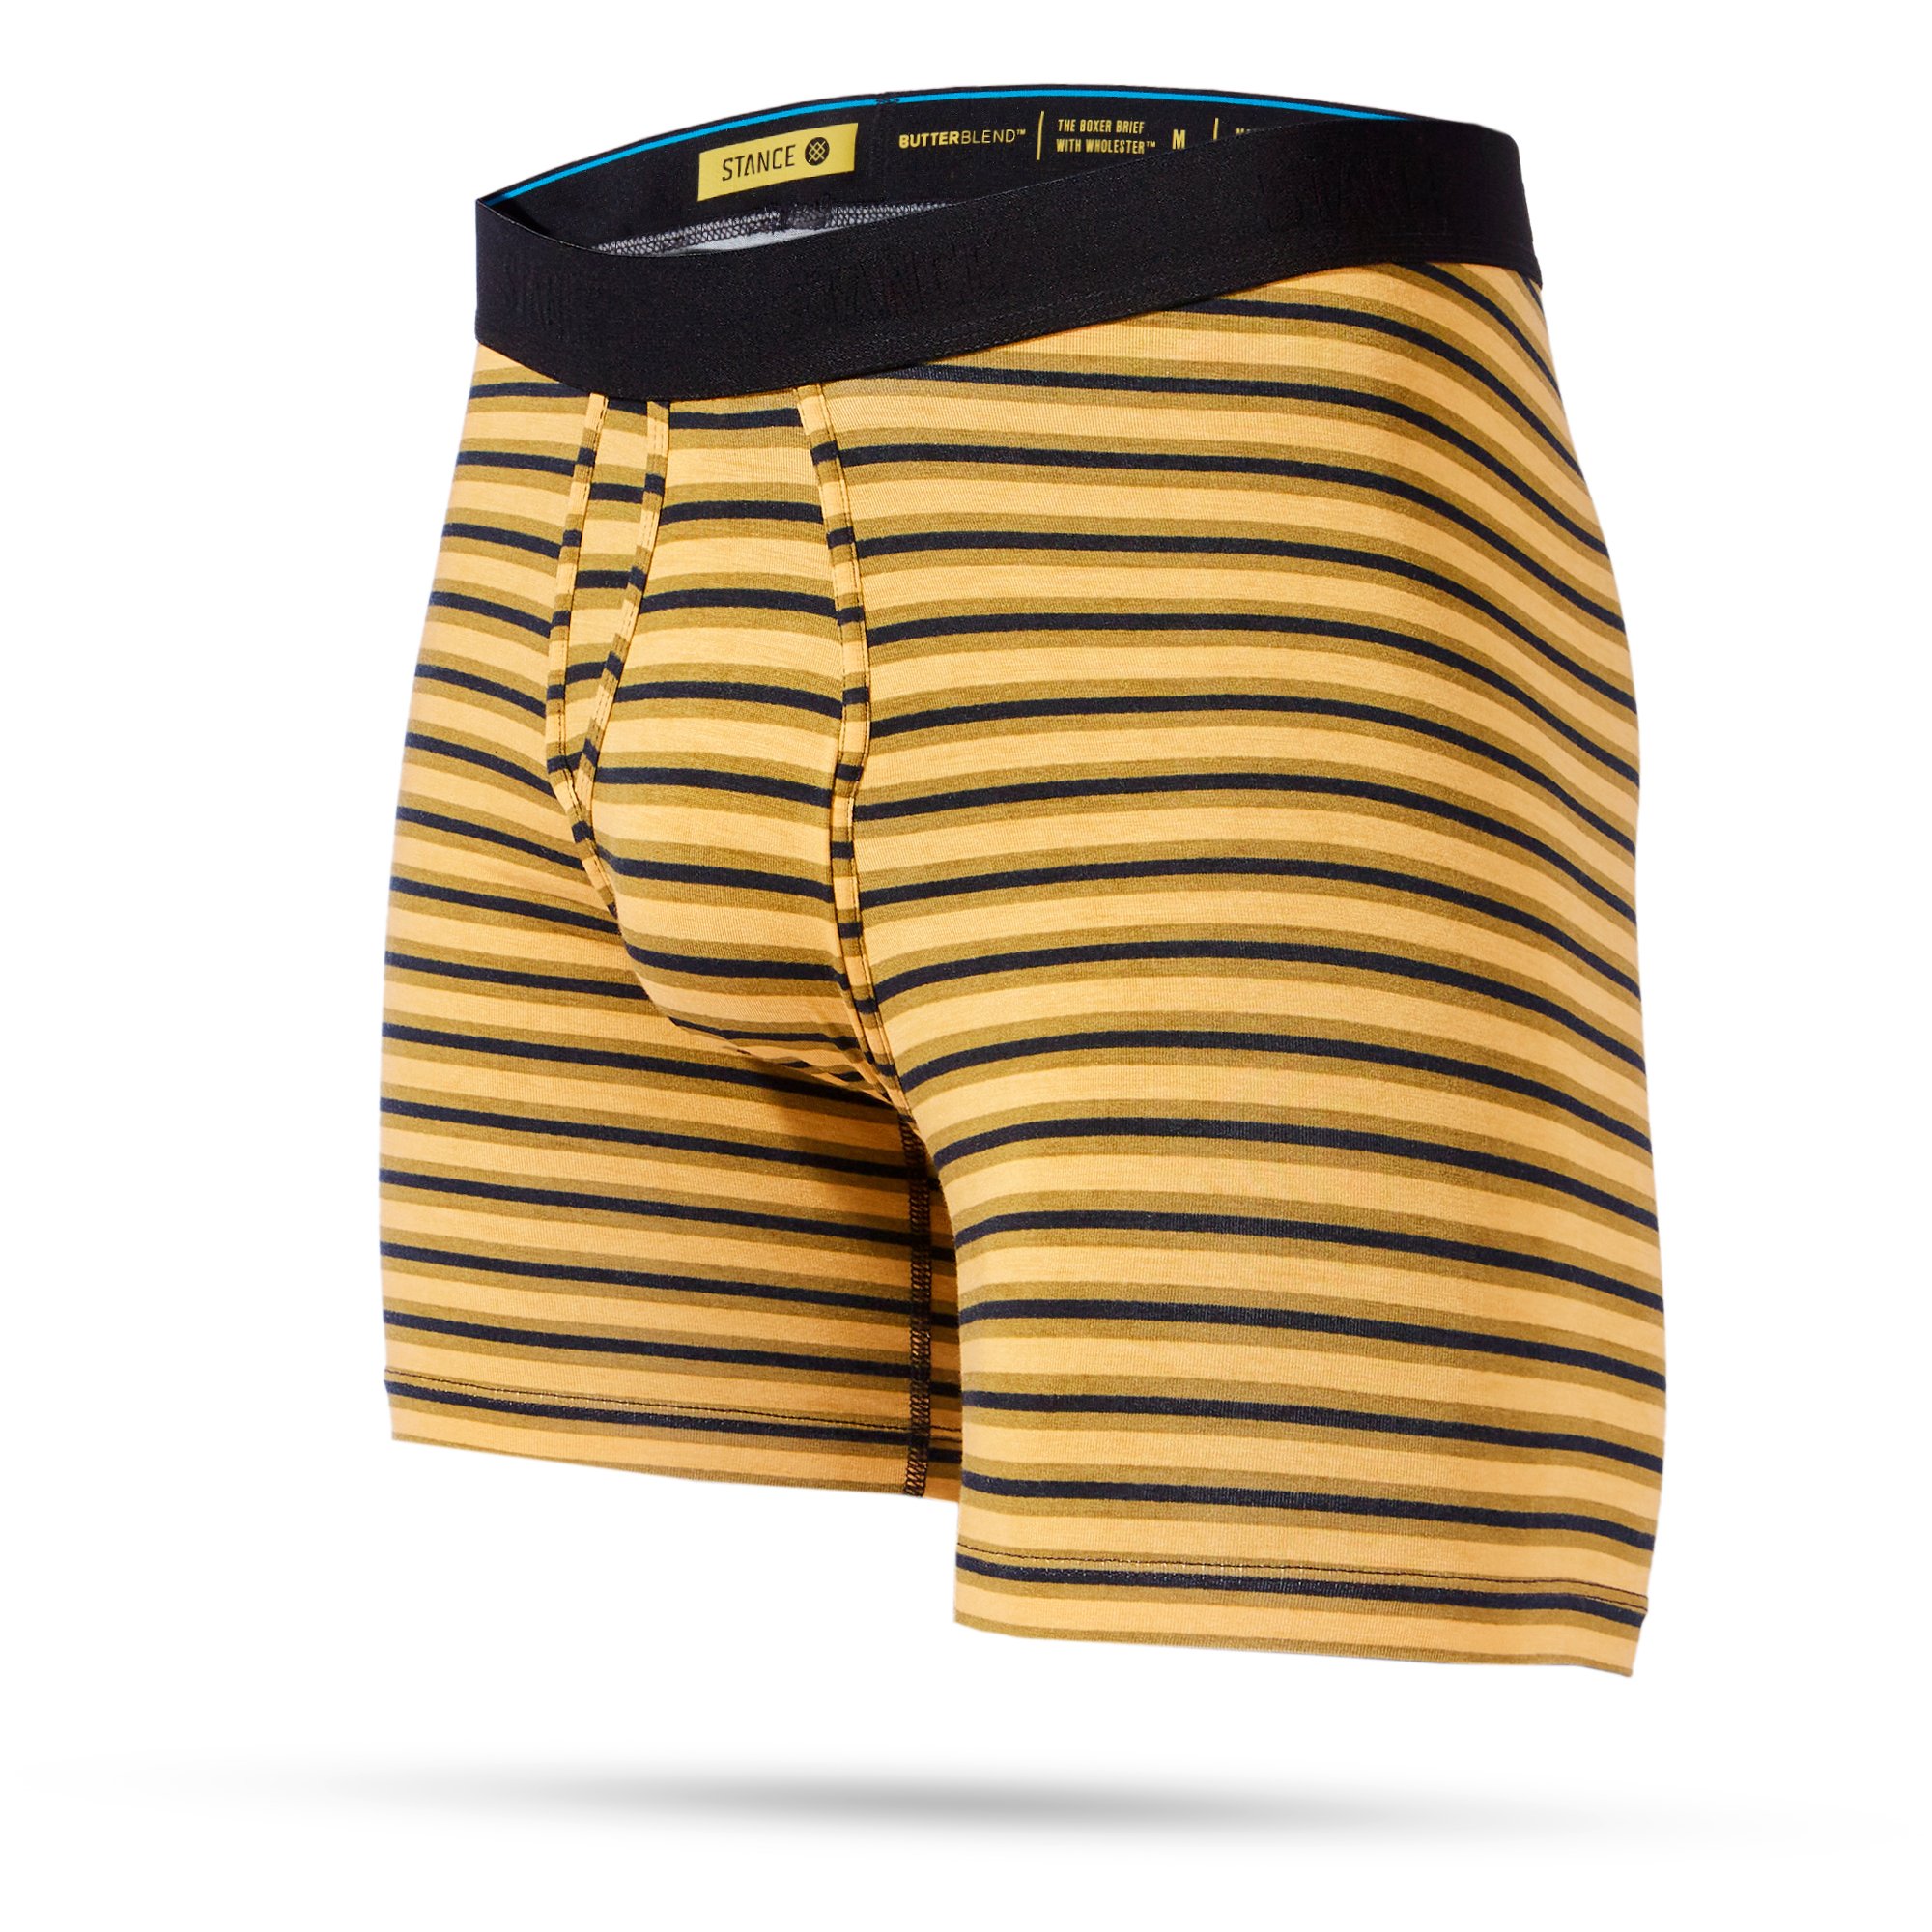 Stance Men's Lindgren Boxer Briefs, Men's Underwear